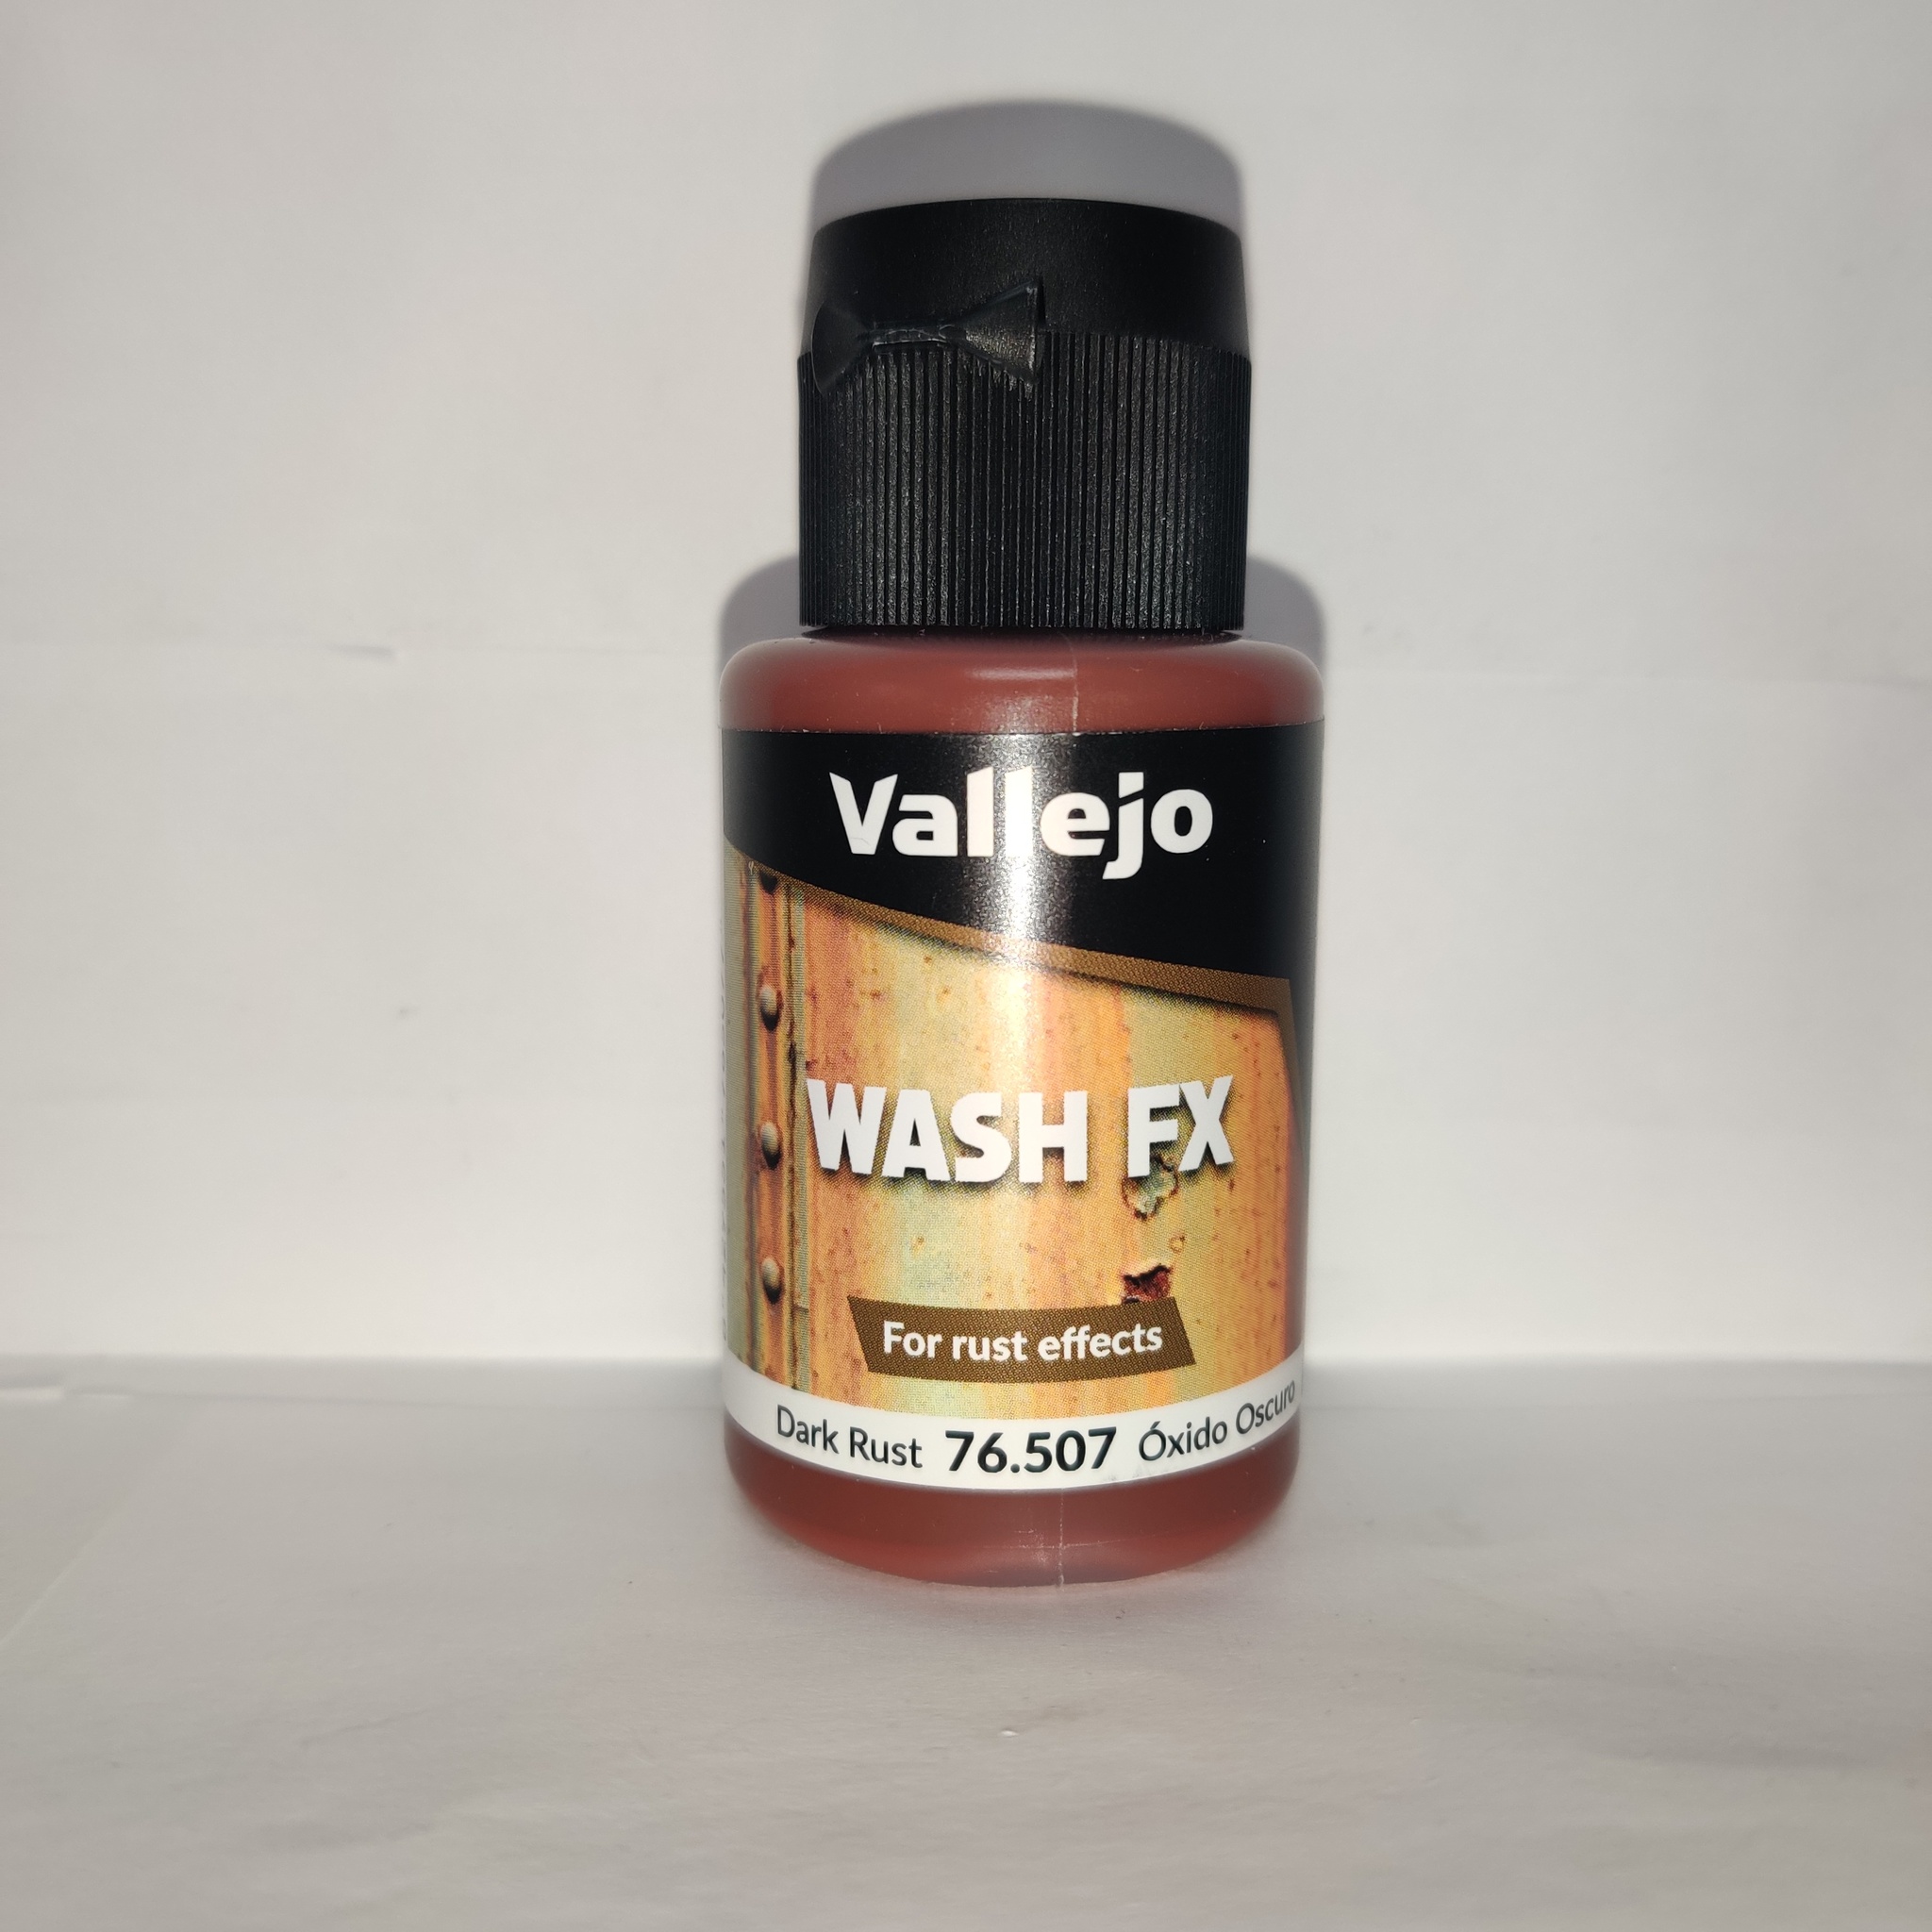 Vallejo Wash FX 35ml Dark Rust for rust effect, 76507